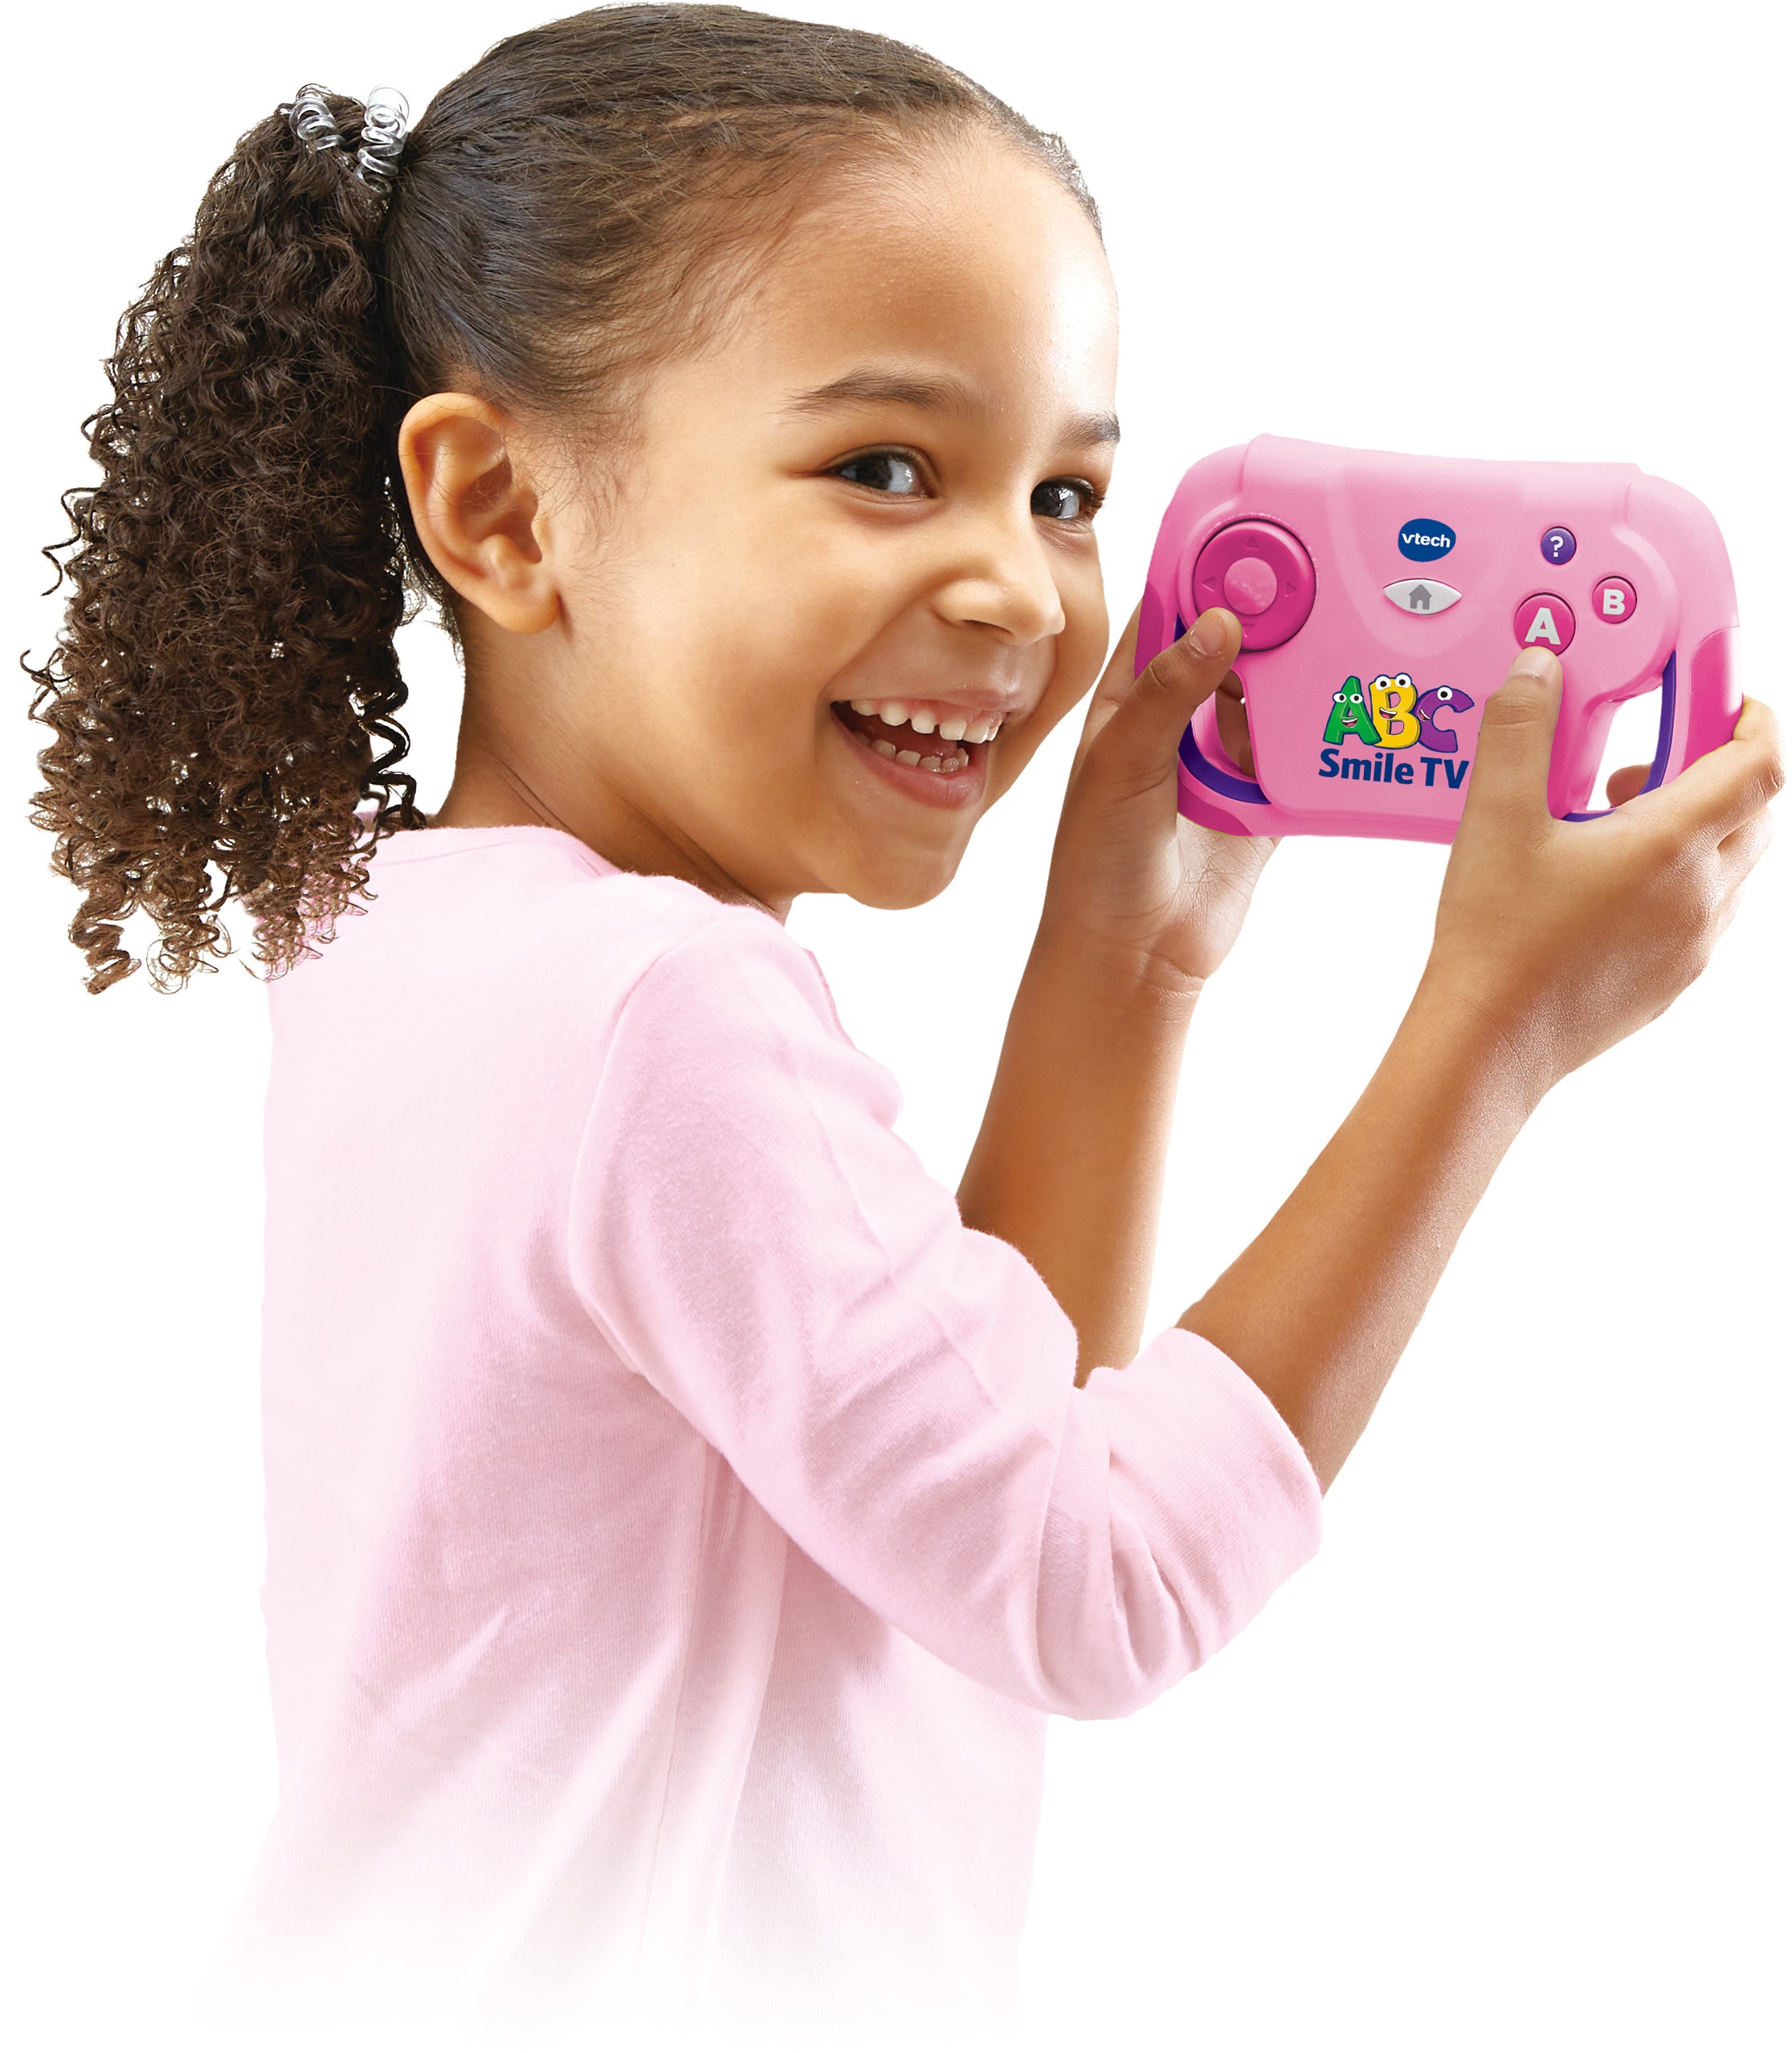 Vtech® Lernspielzeug »Ready Set School, ABC Smile TV, pink«